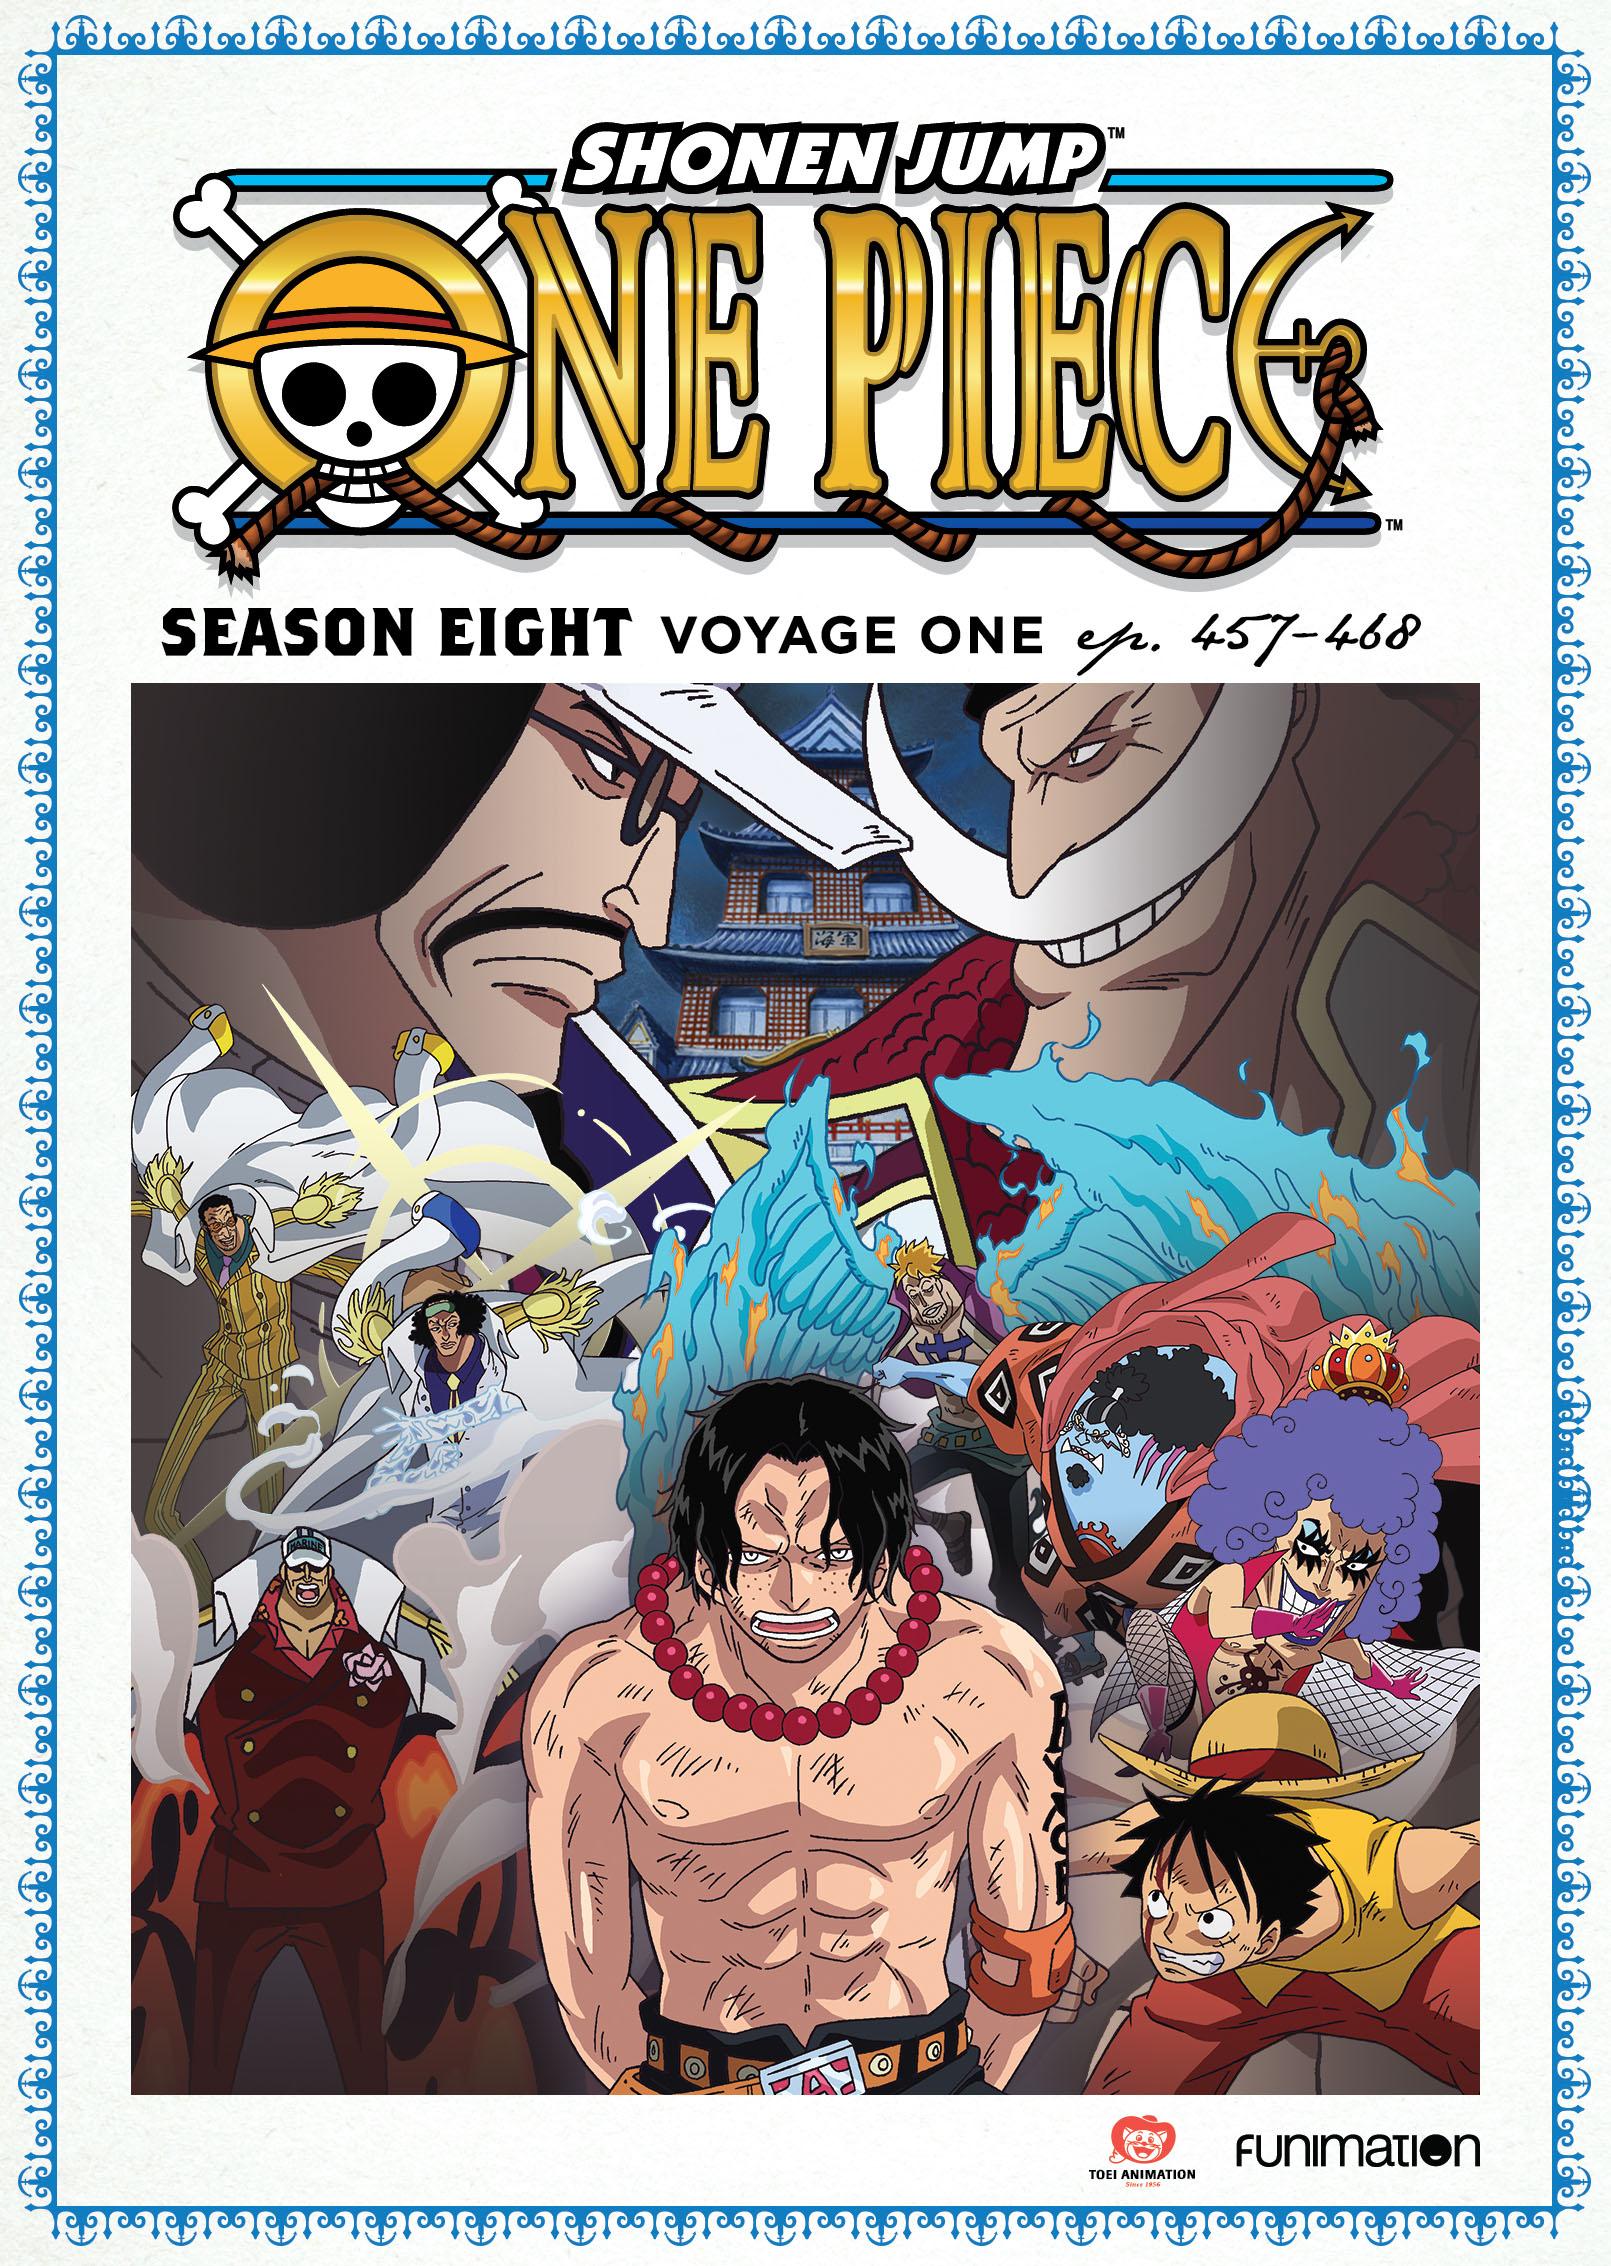 One Piece: Season Eight Voyage One [2 Discs] [DVD] - Best Buy